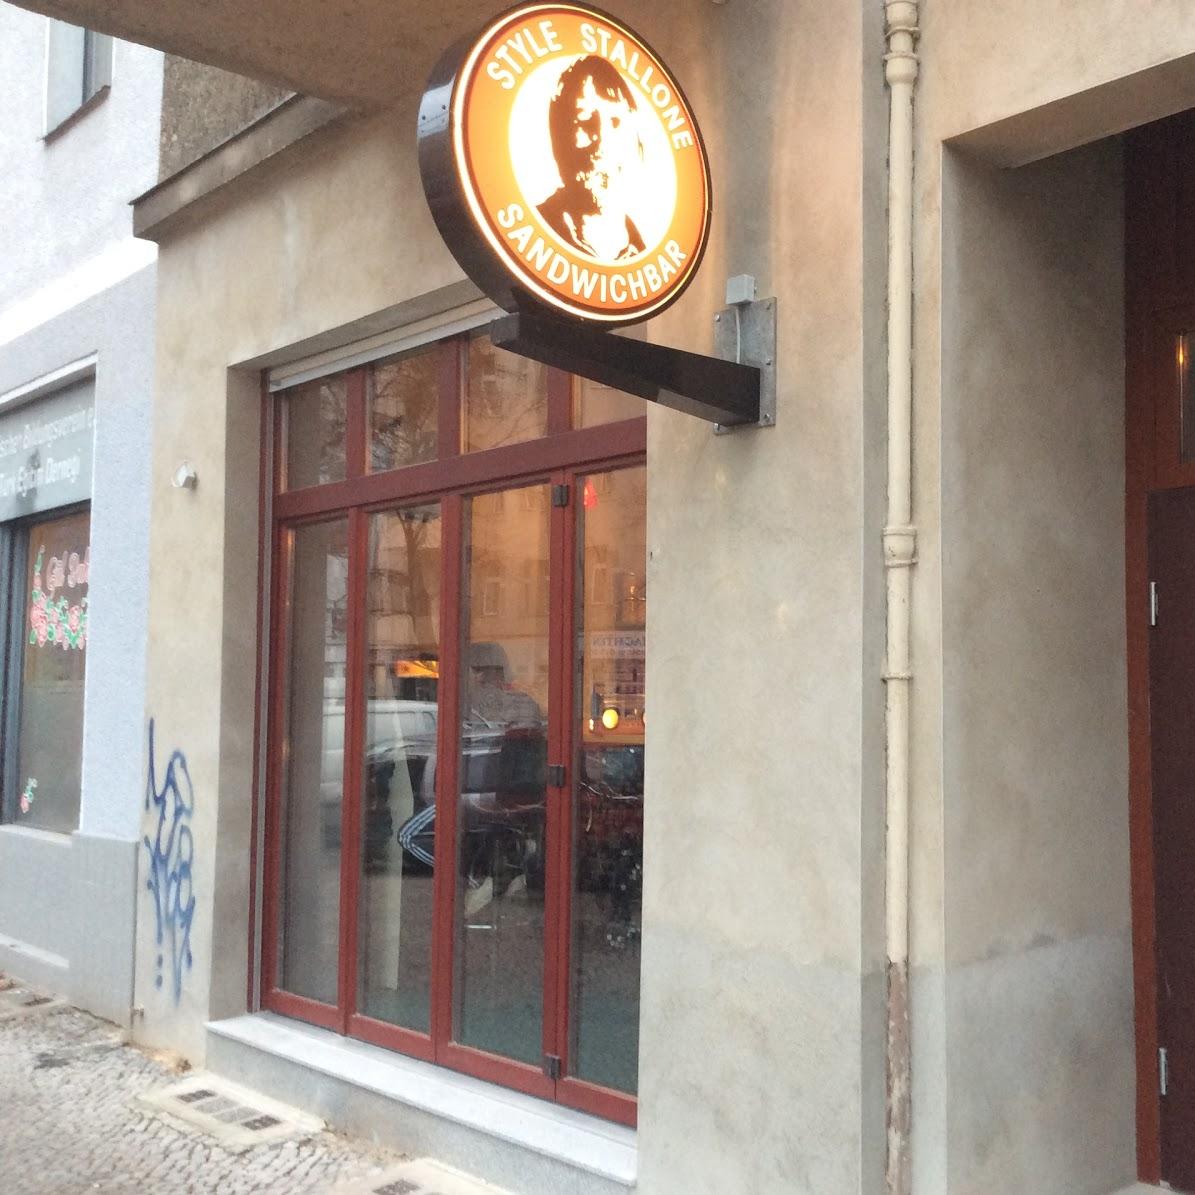 Restaurant "Style Stallone Sandwichbar" in Berlin